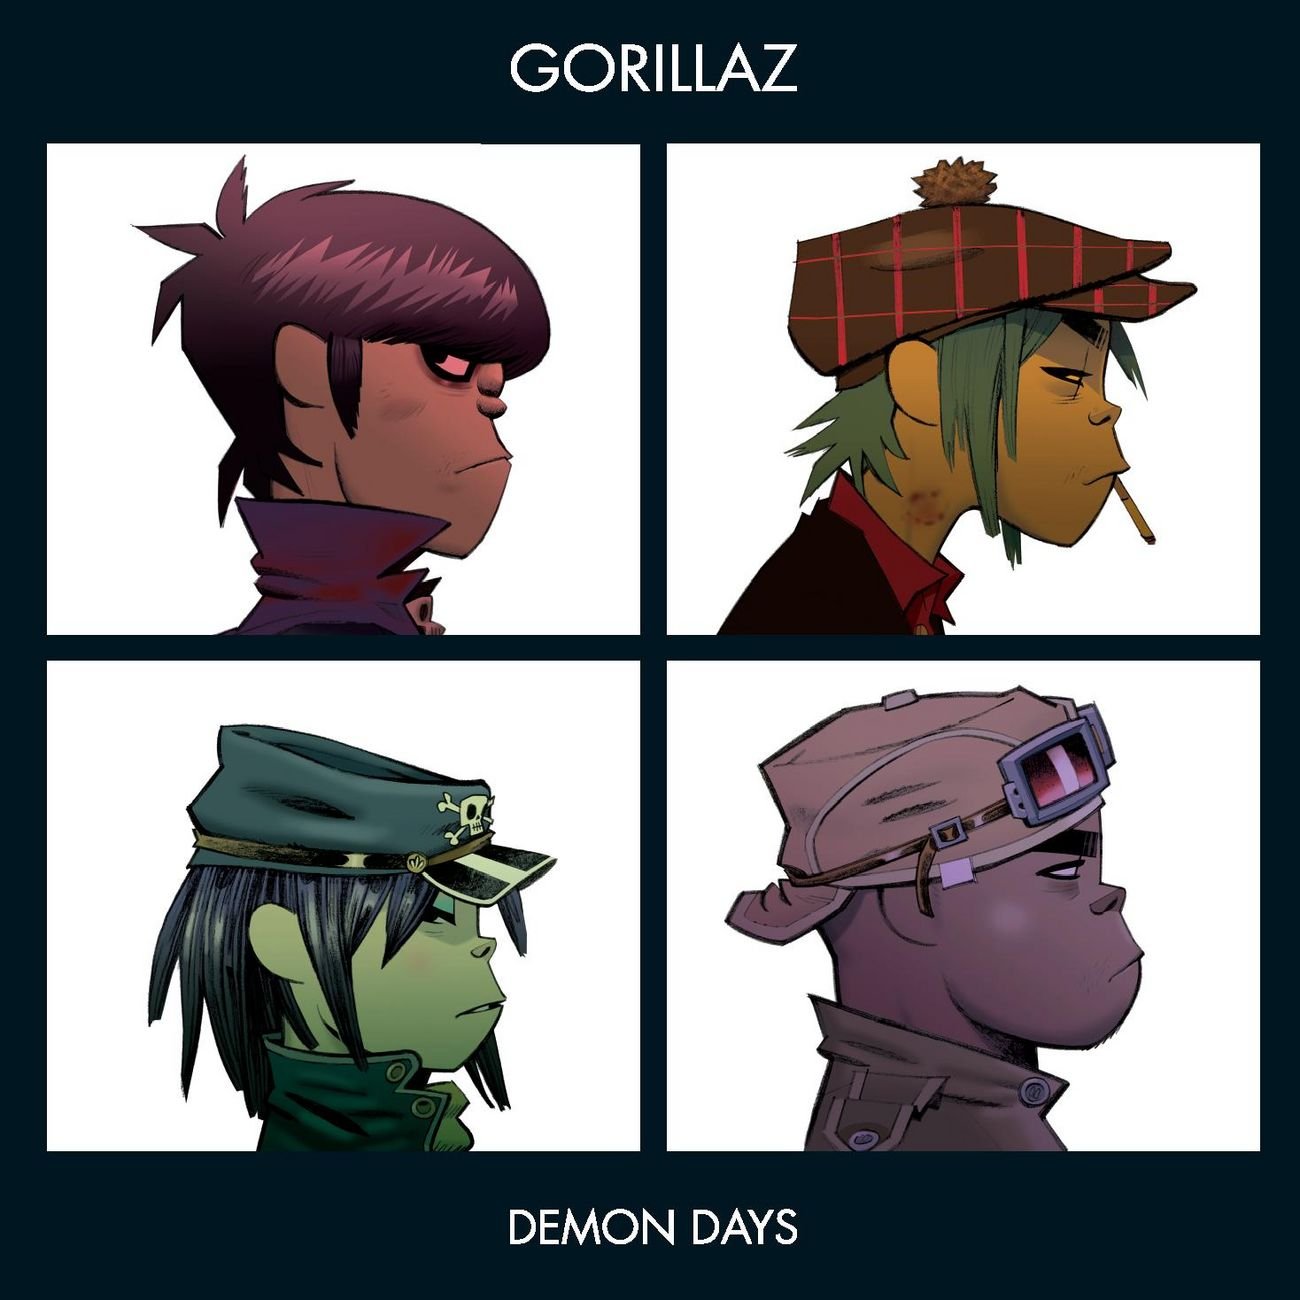 Gorillaz "Demon Days" 2LP